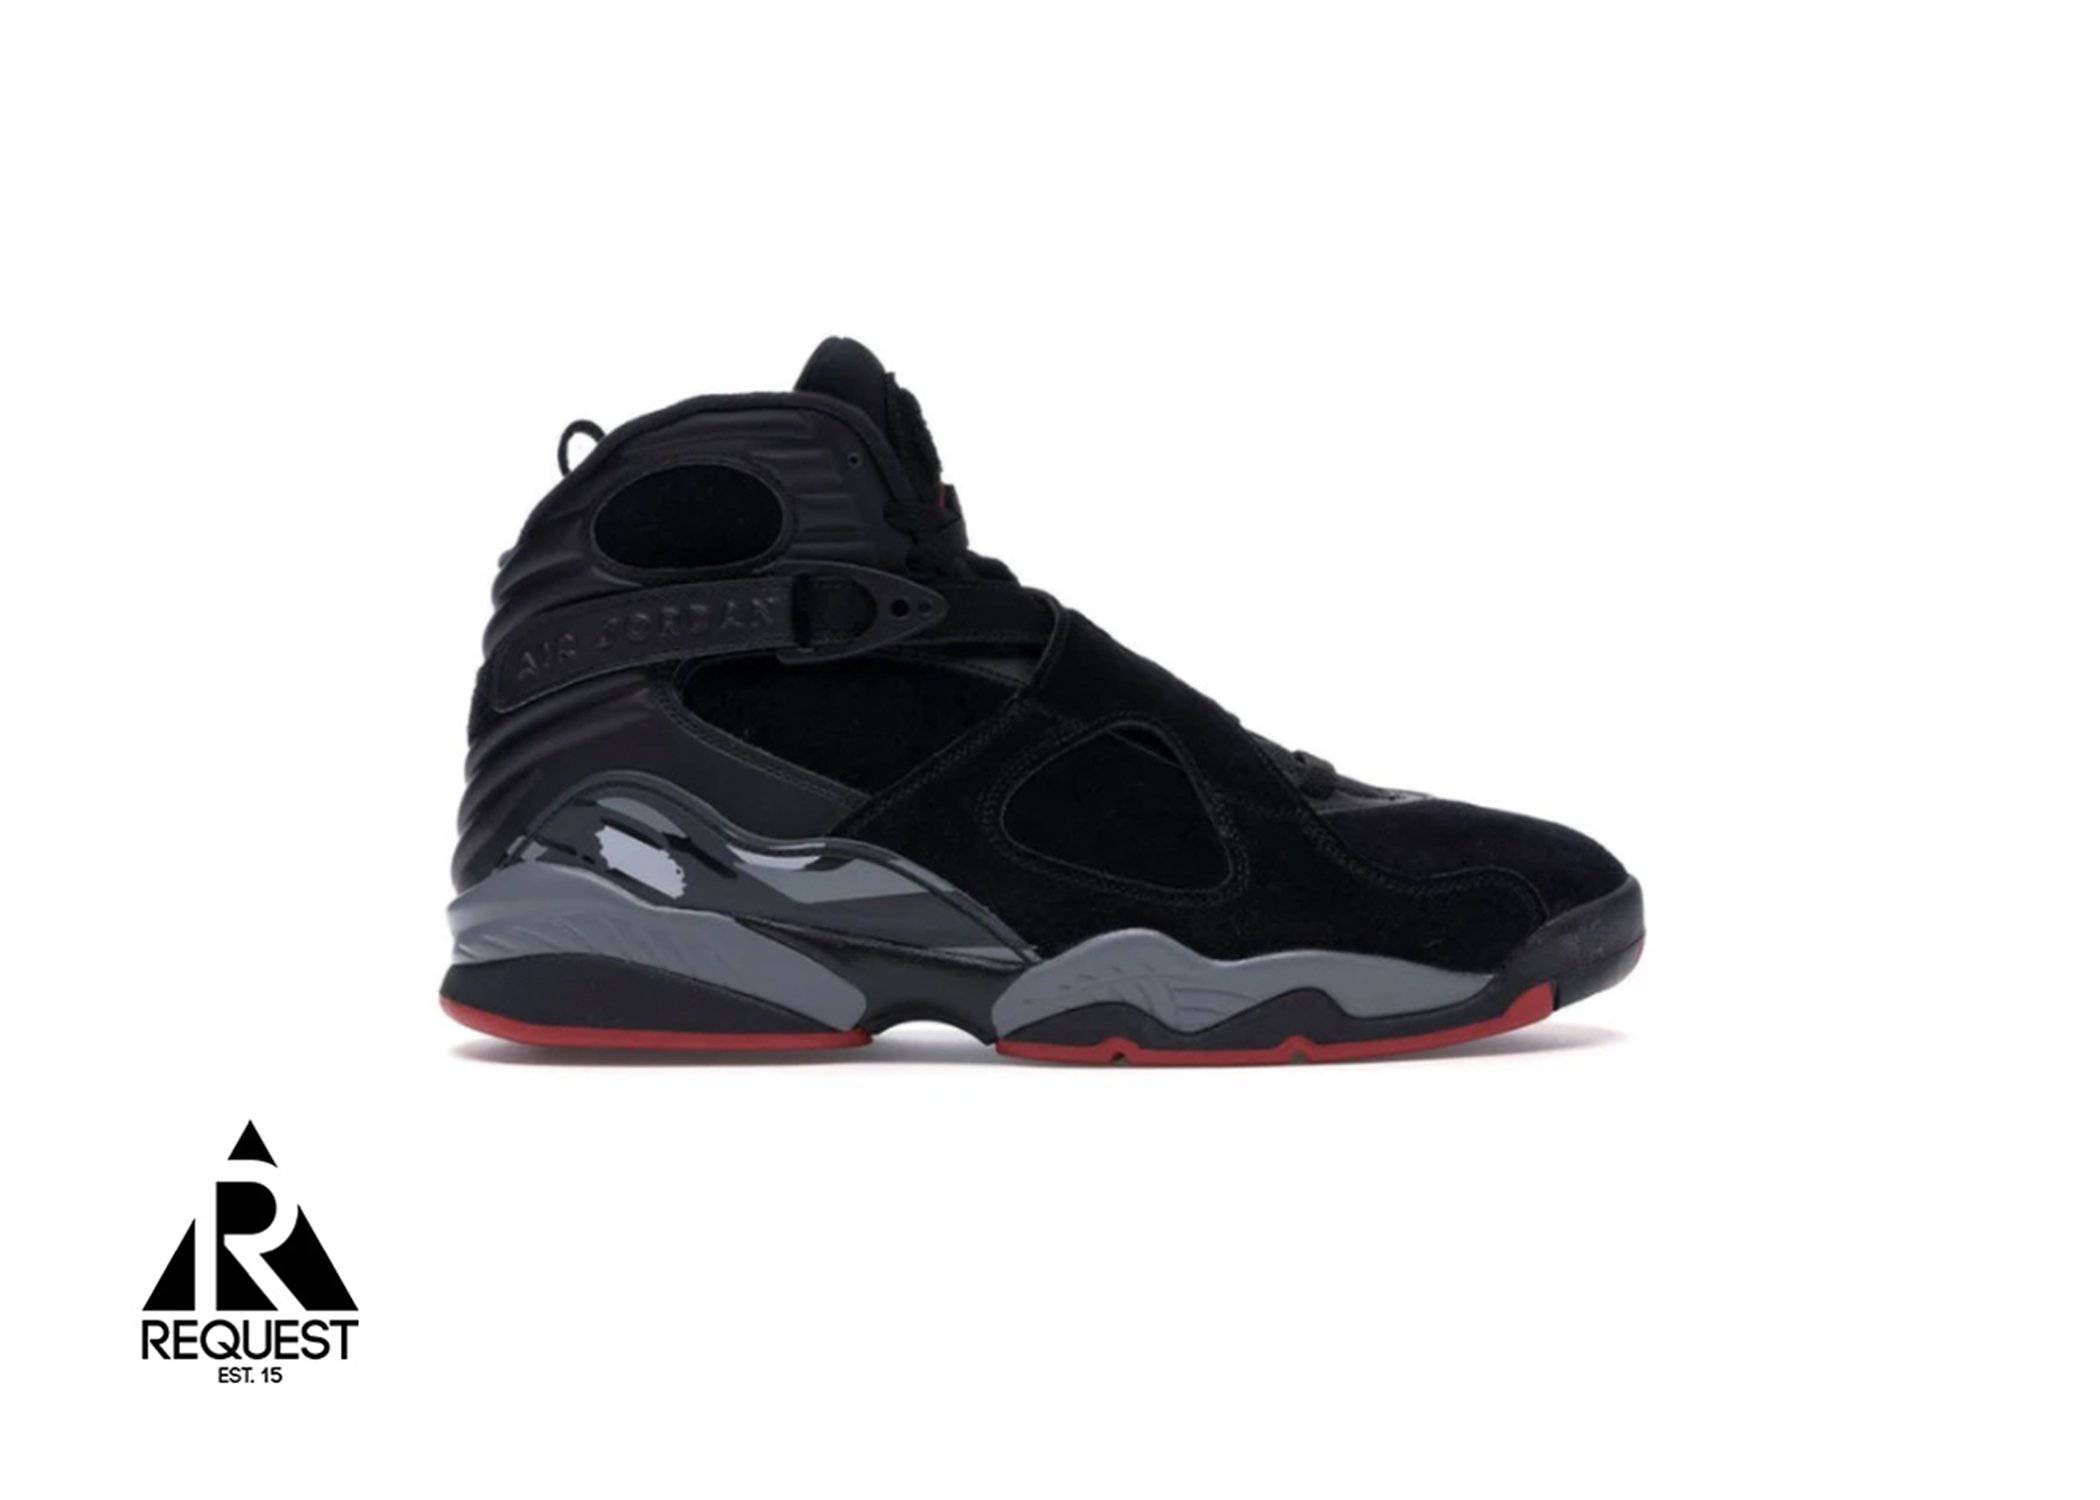 Air Jordan 8 Retro “Black Cement“